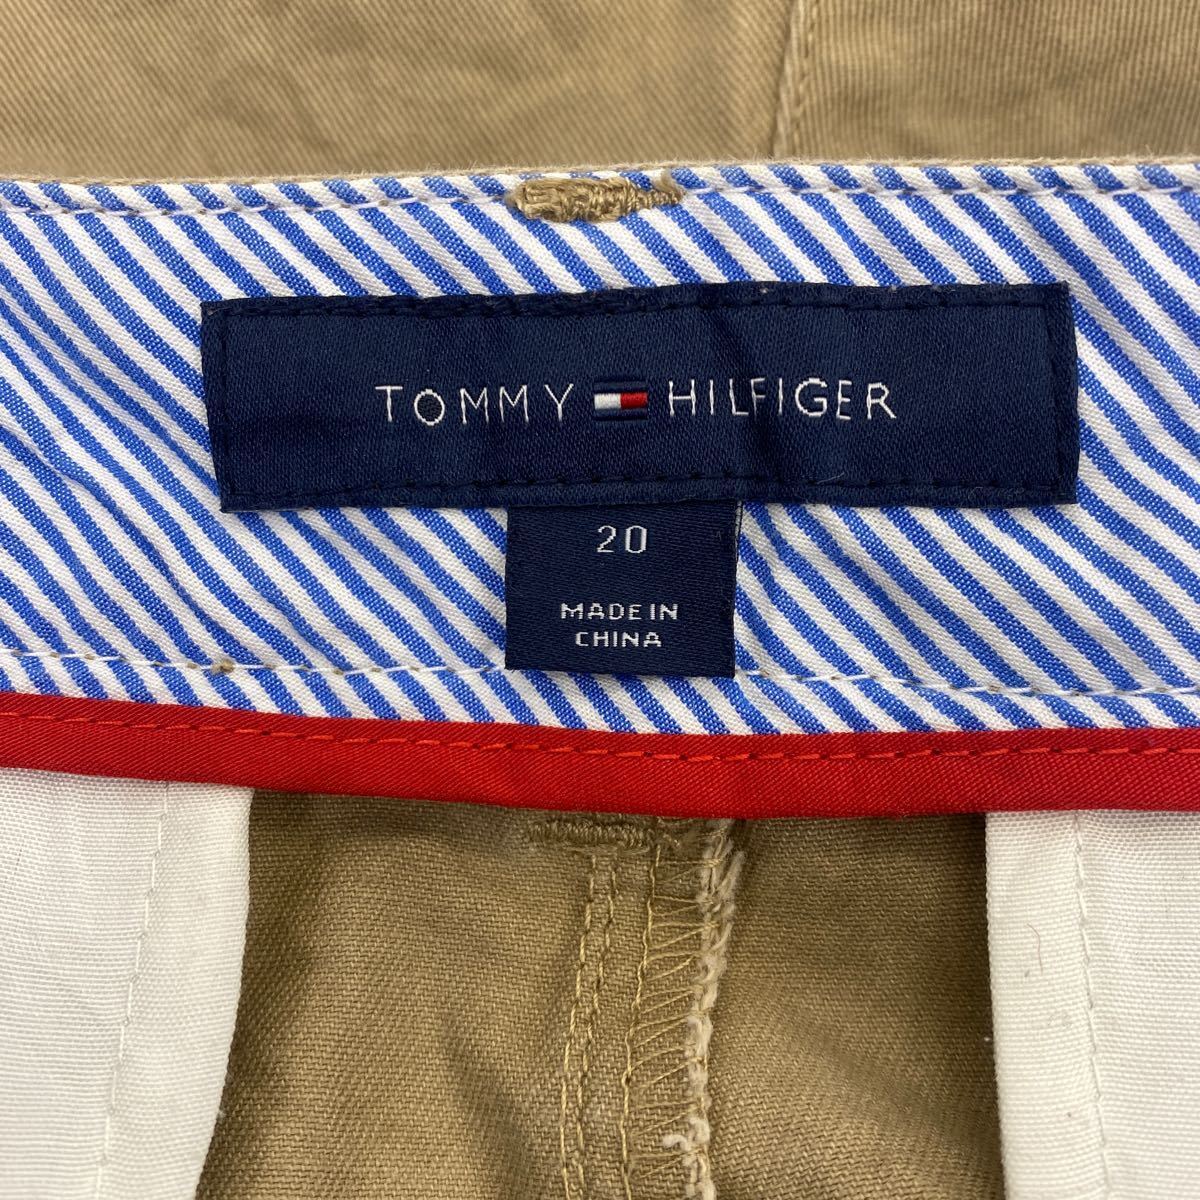 TOMMY HILFIGER брюки-чинос W32 Tommy Hilfiger хлопок женский бежевый б/у одежда . America скупка 2311-1302